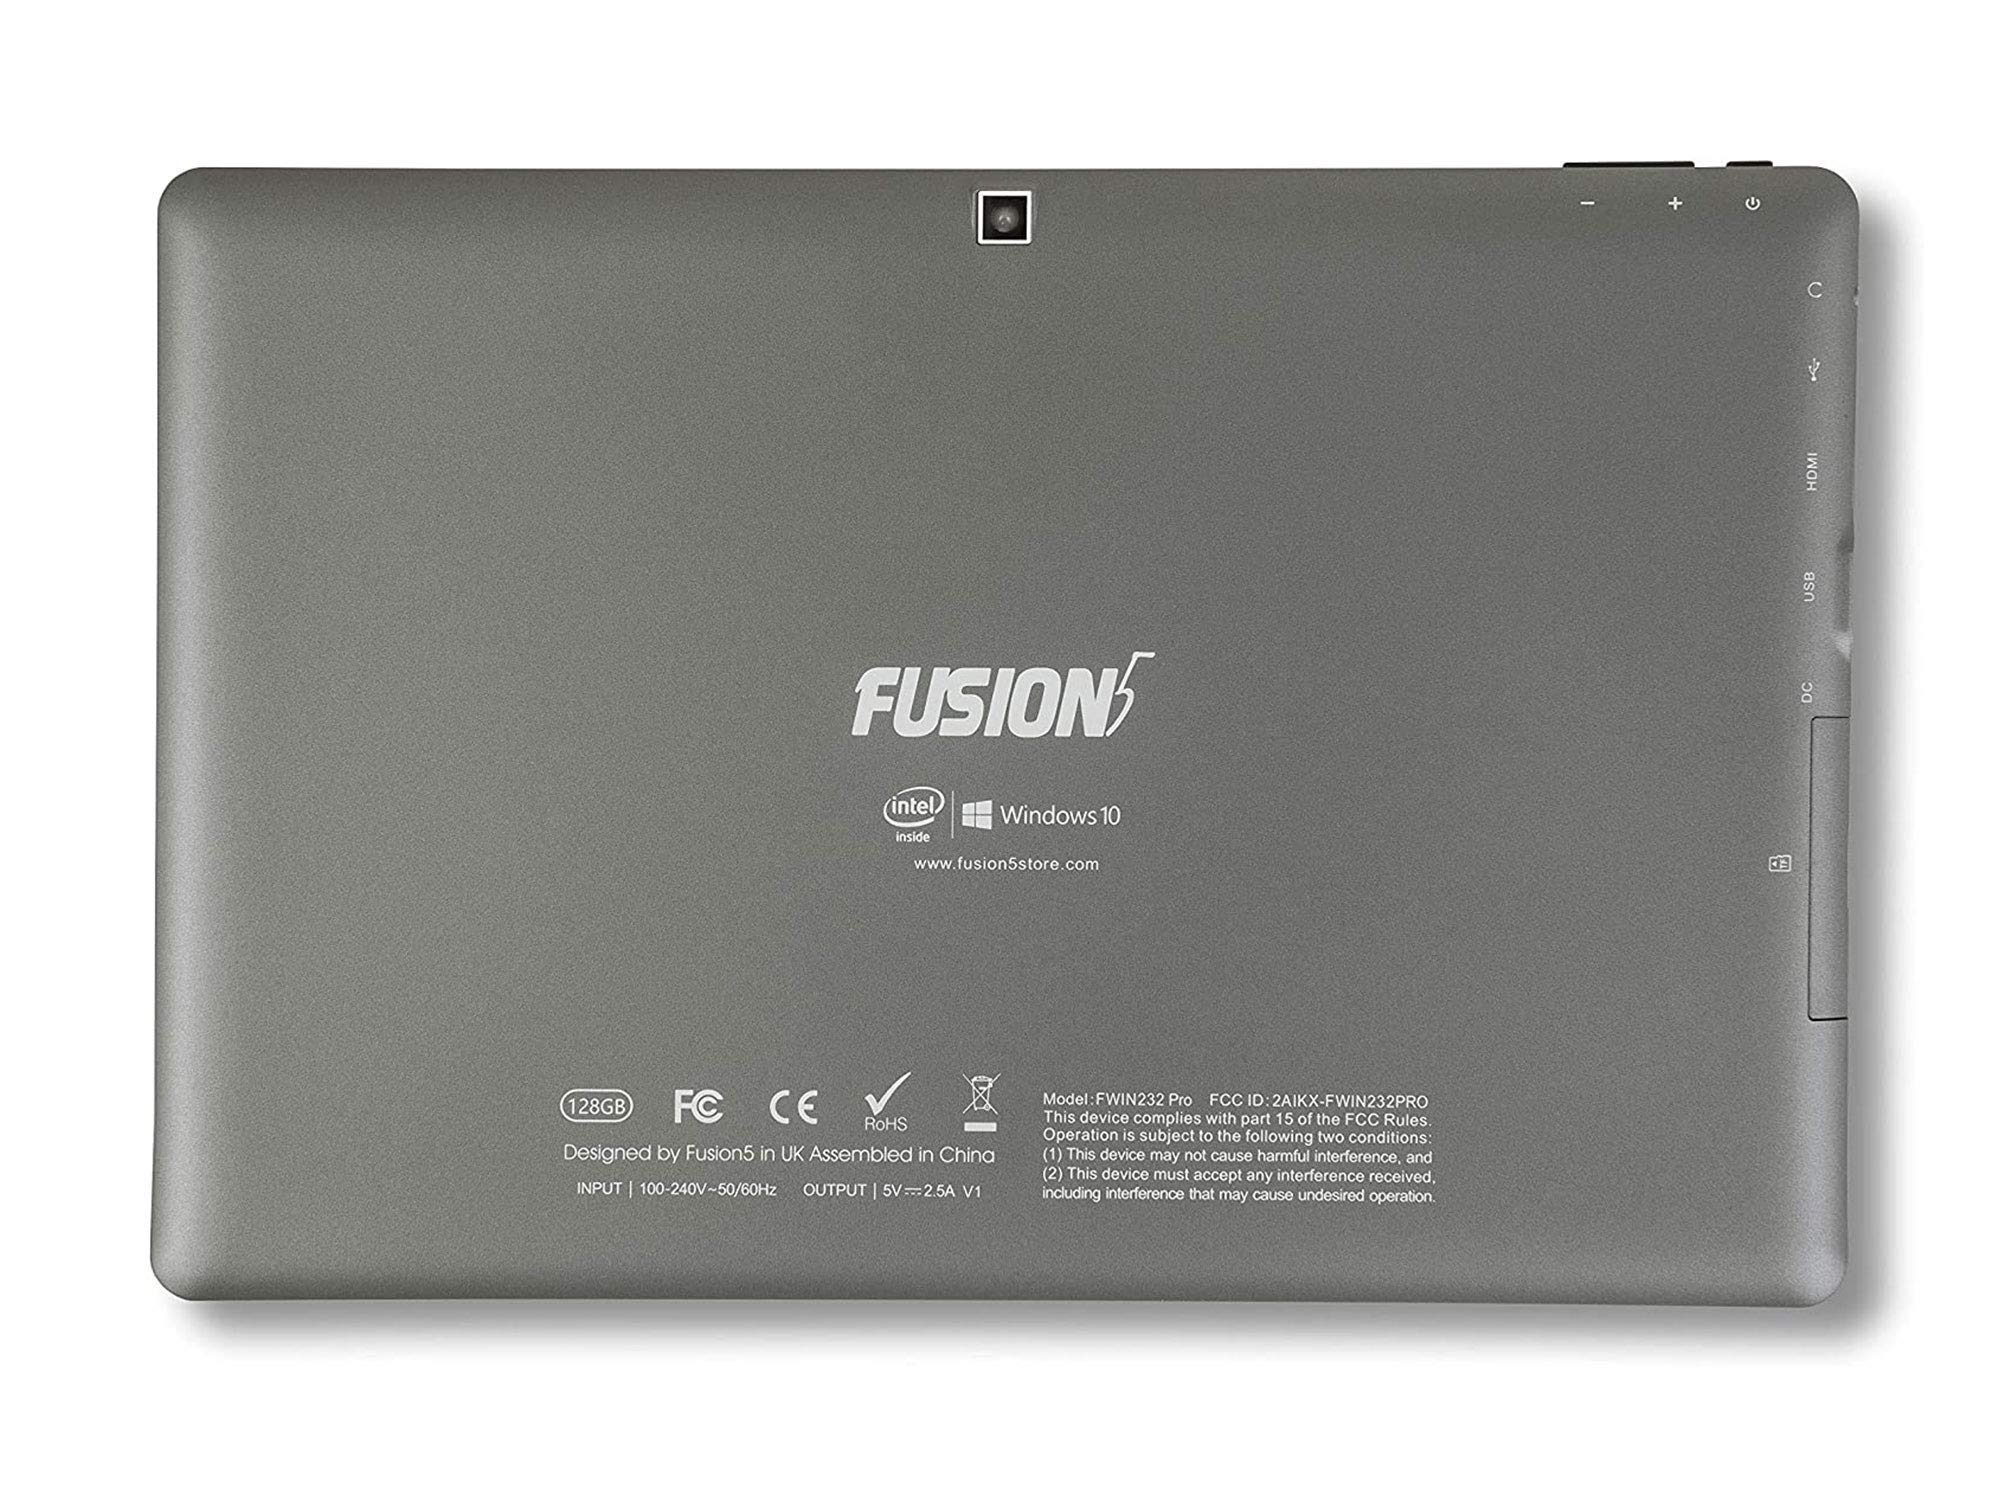 Fusion5 10